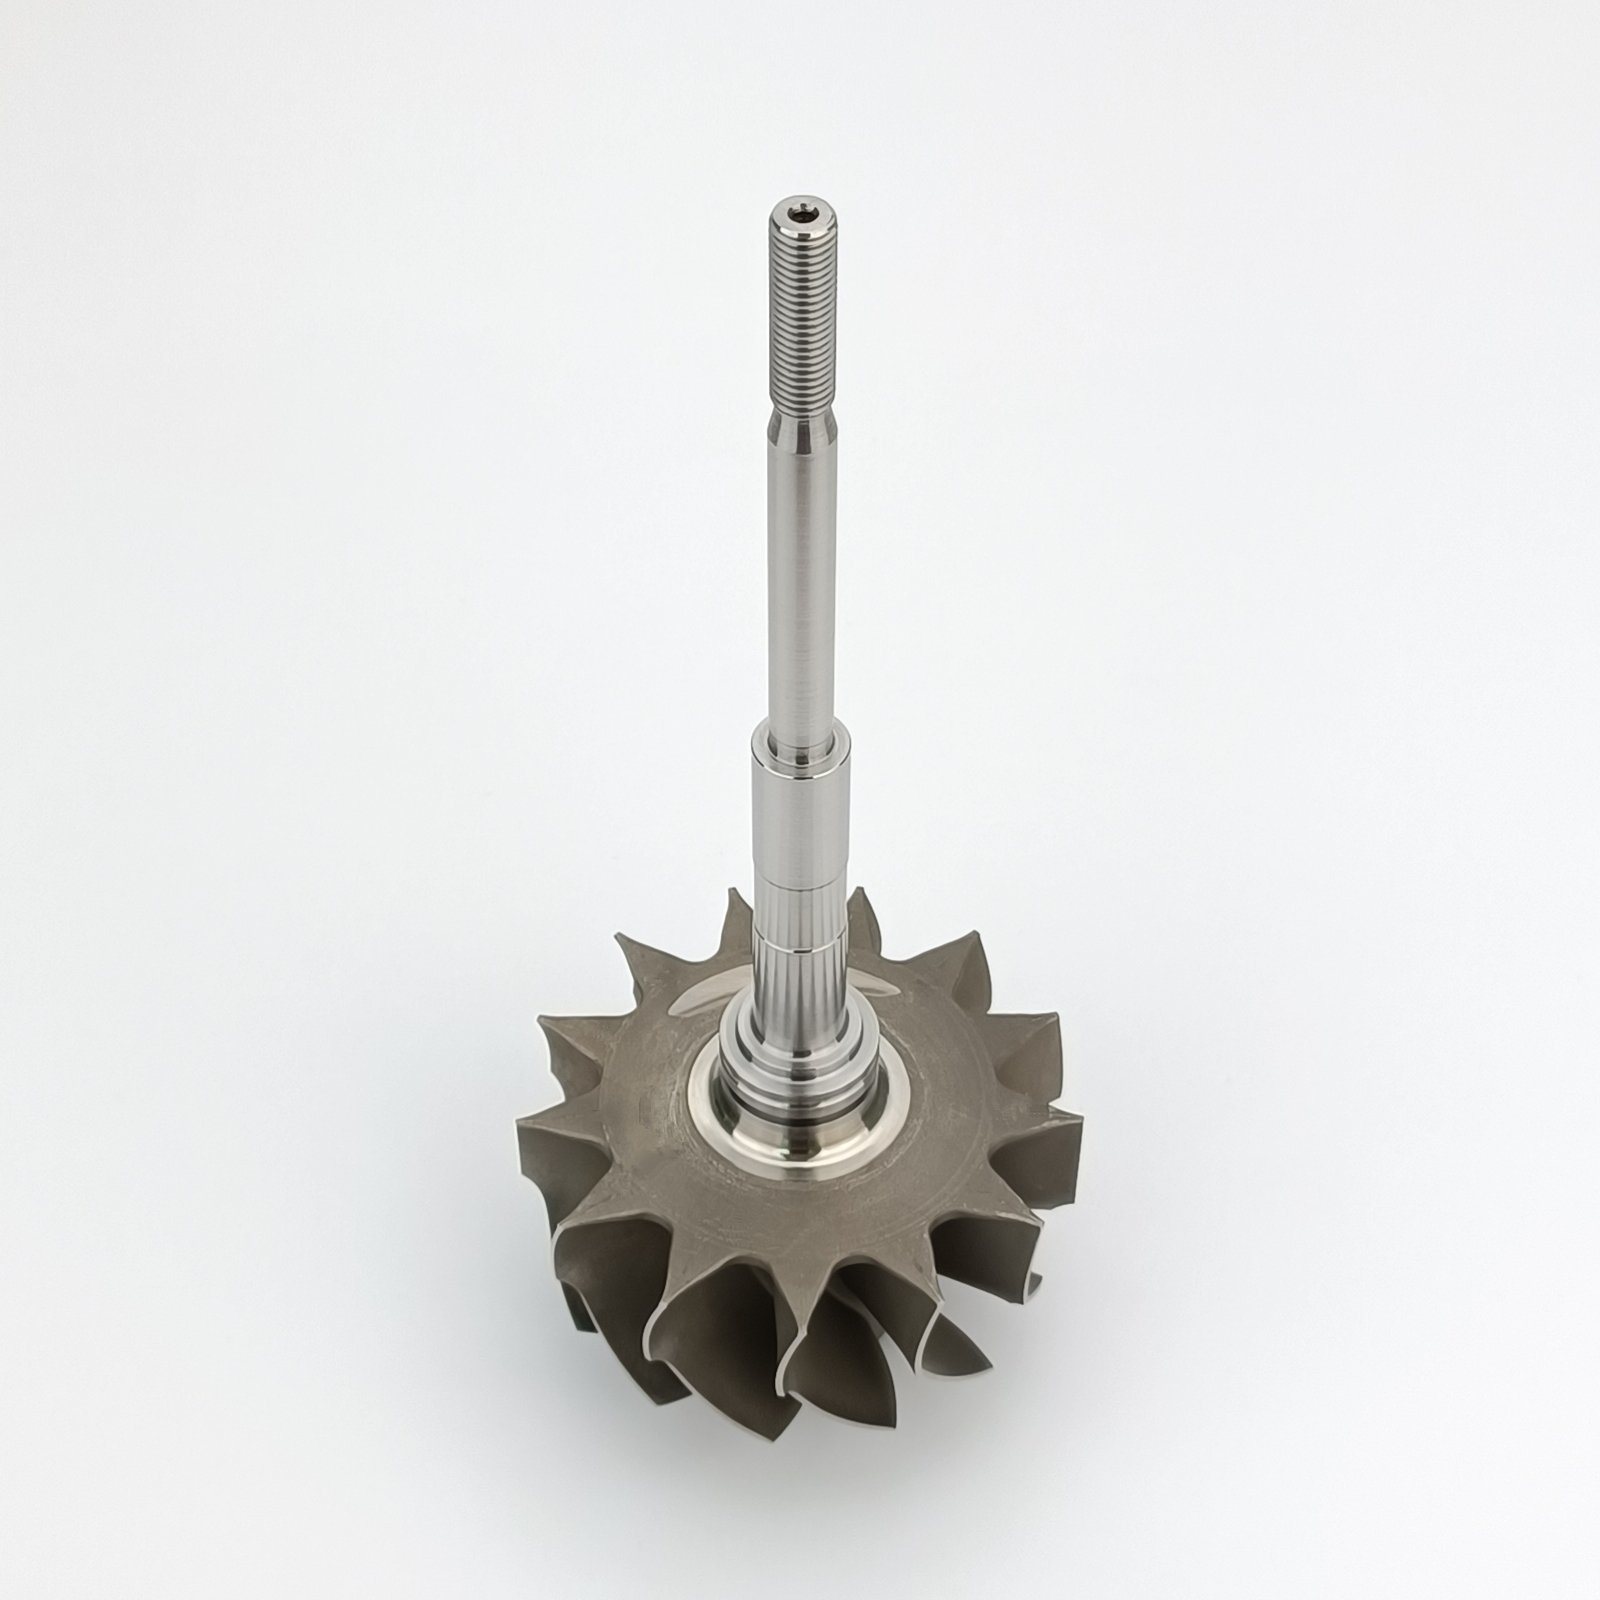 Turbo Turbine Wheel Shaft Gt37 717079-0030 Ind 72.6mm Exd 66.45mm for 743250-0013 Turbochargers